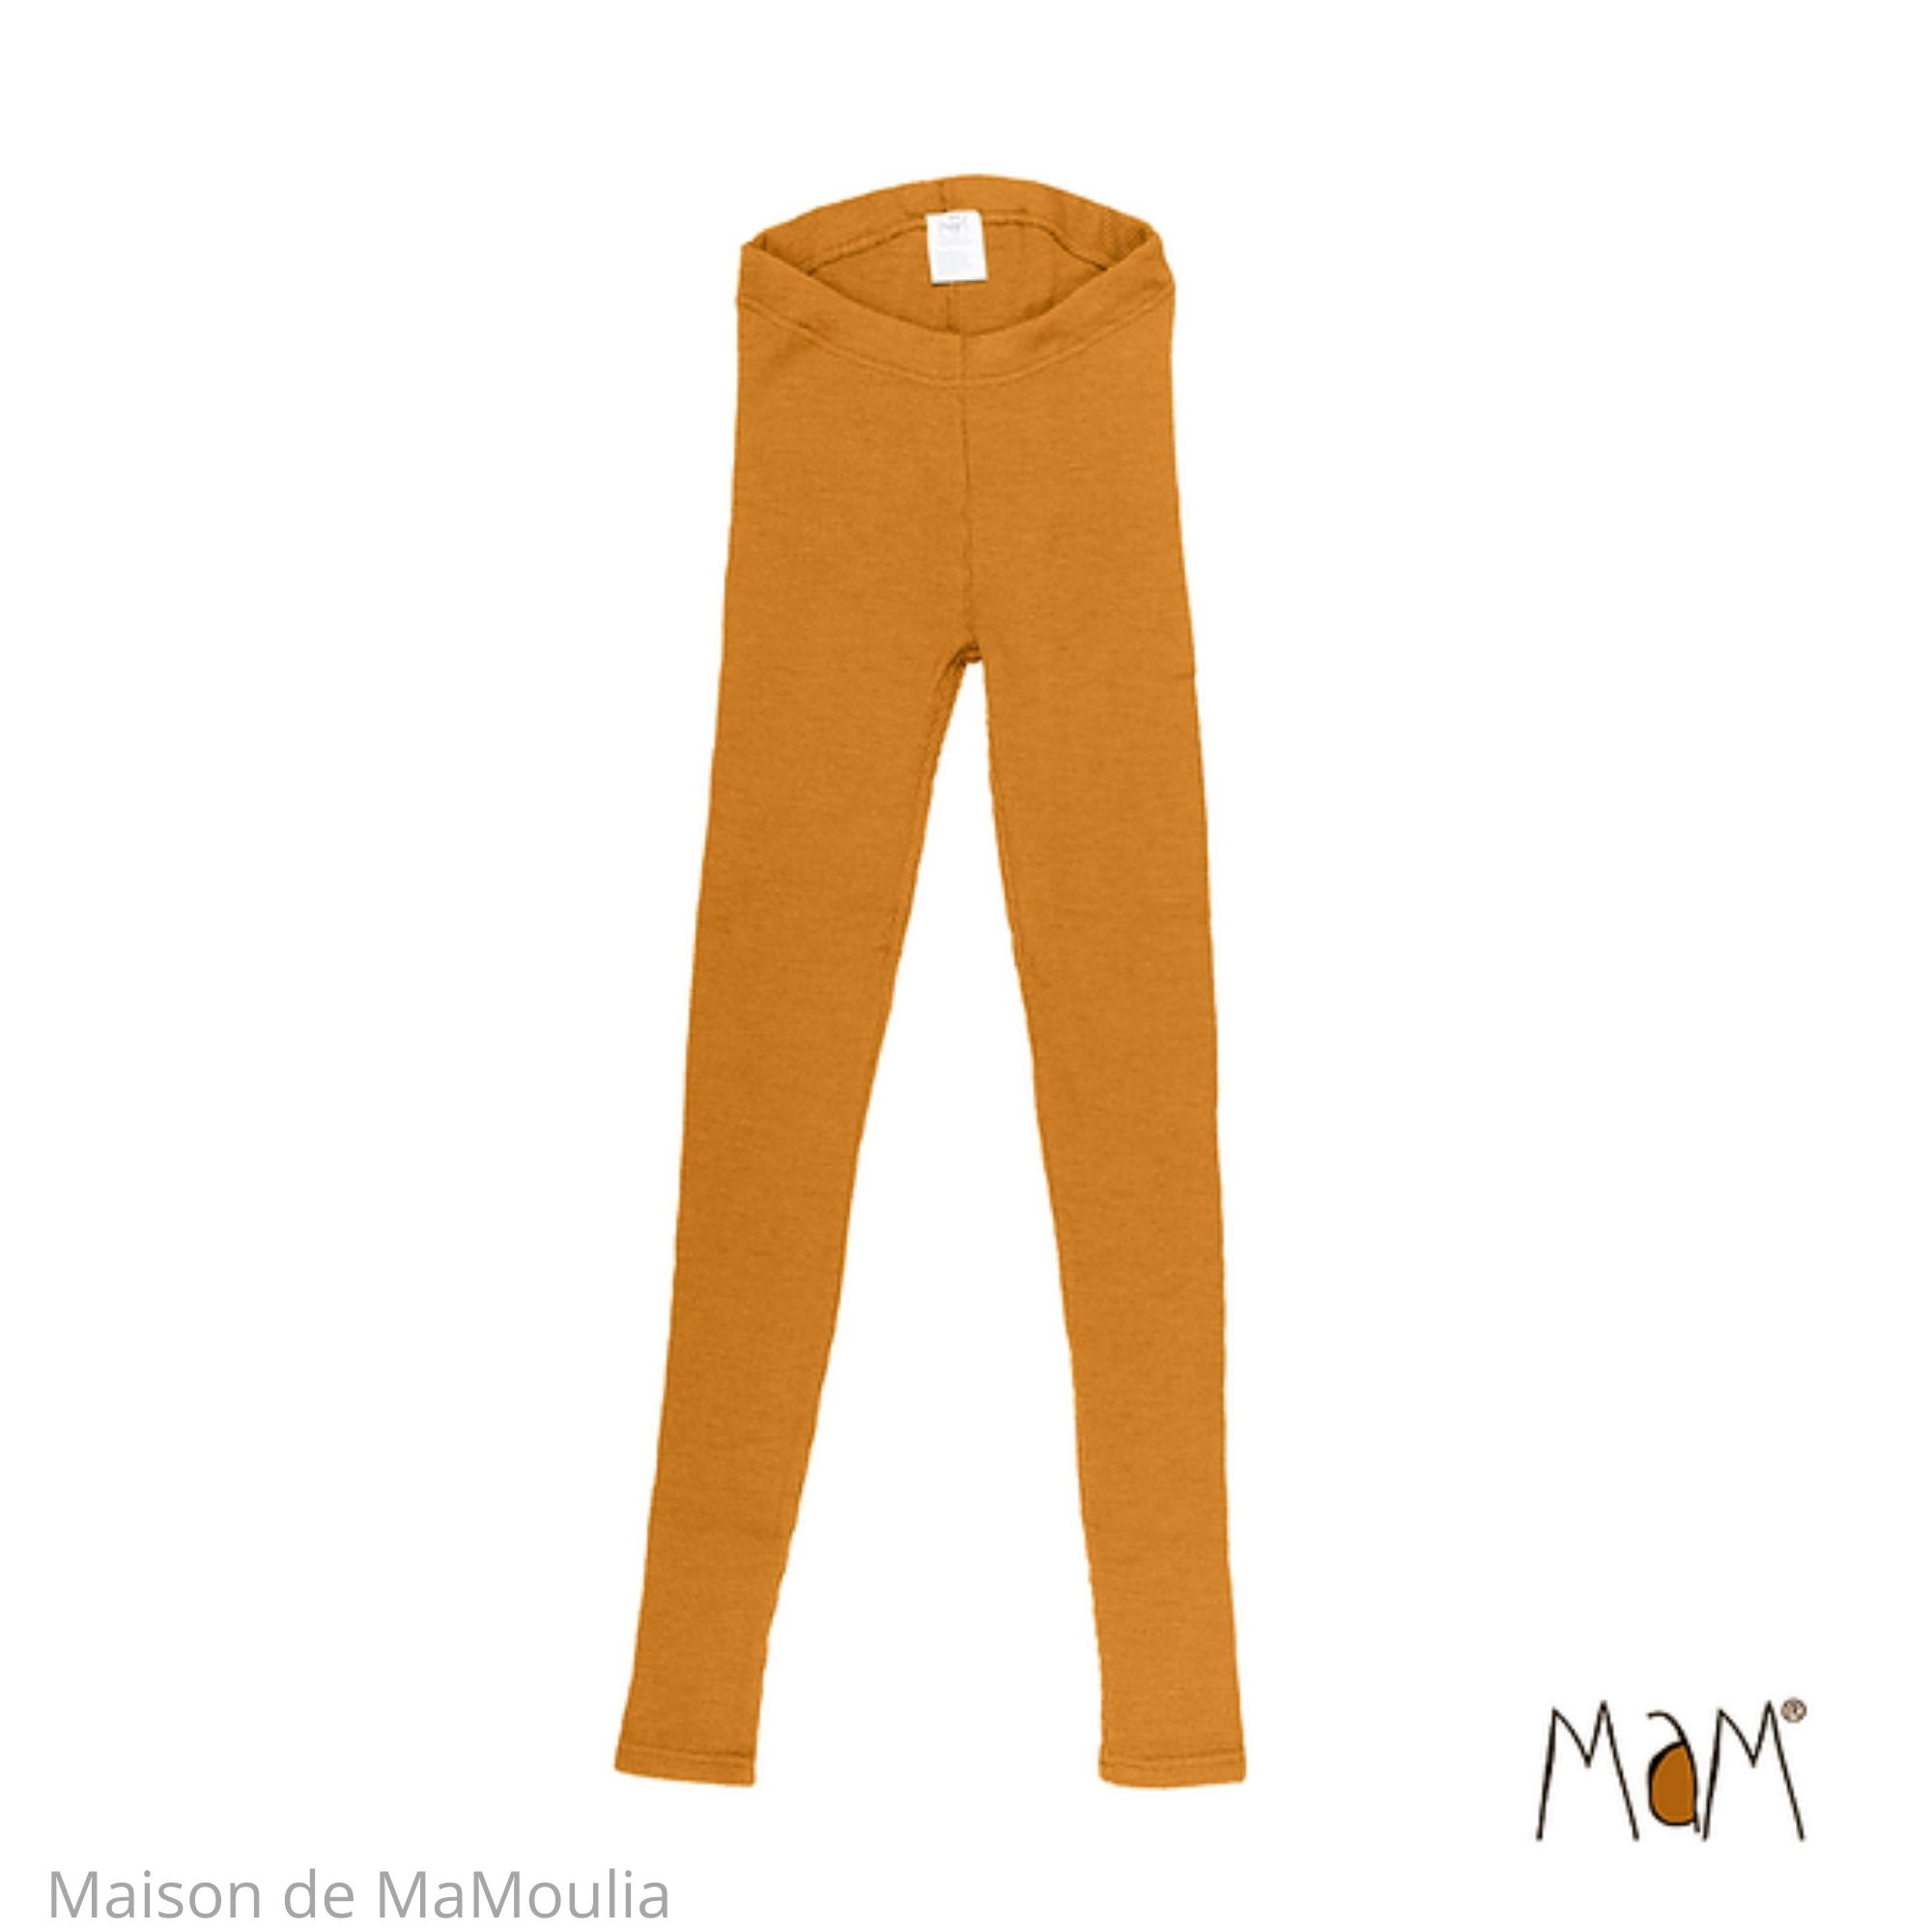 all-time-leggings-mam-pure-laine-merinos-babyidea-maison-de-mamoulia-honey-bread-jaune